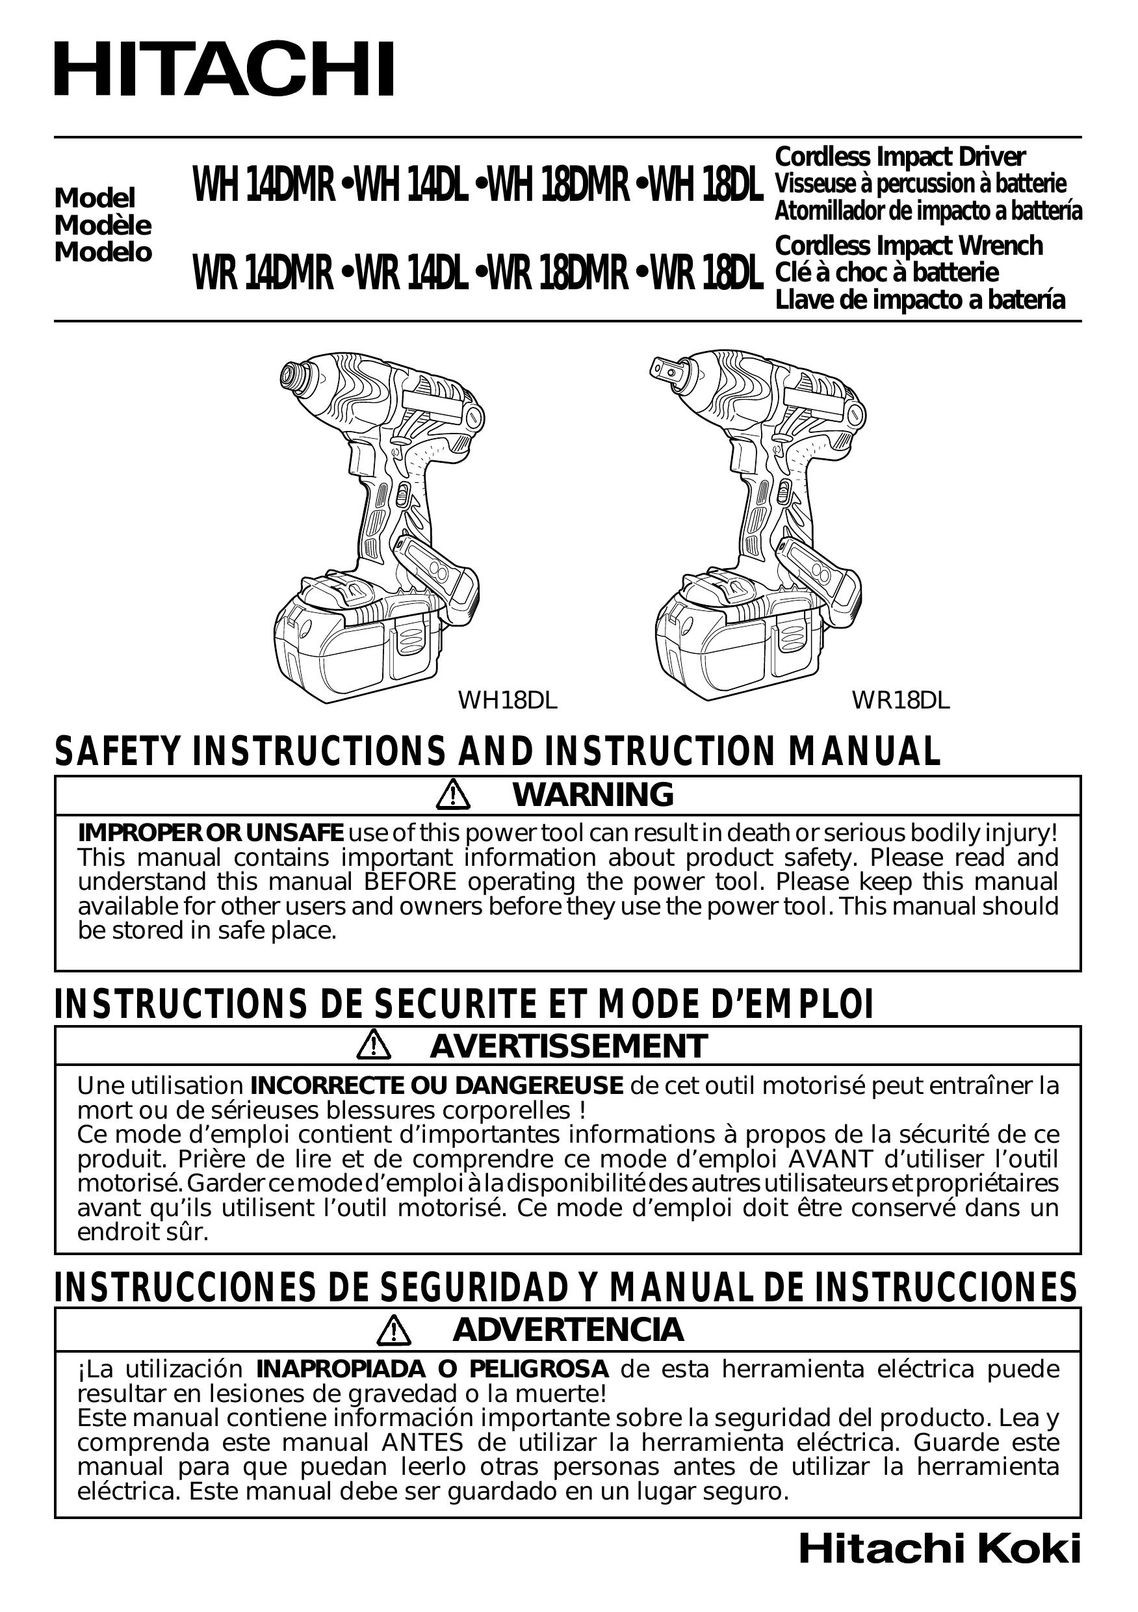 Hitachi WH41DMR Cordless Drill User Manual